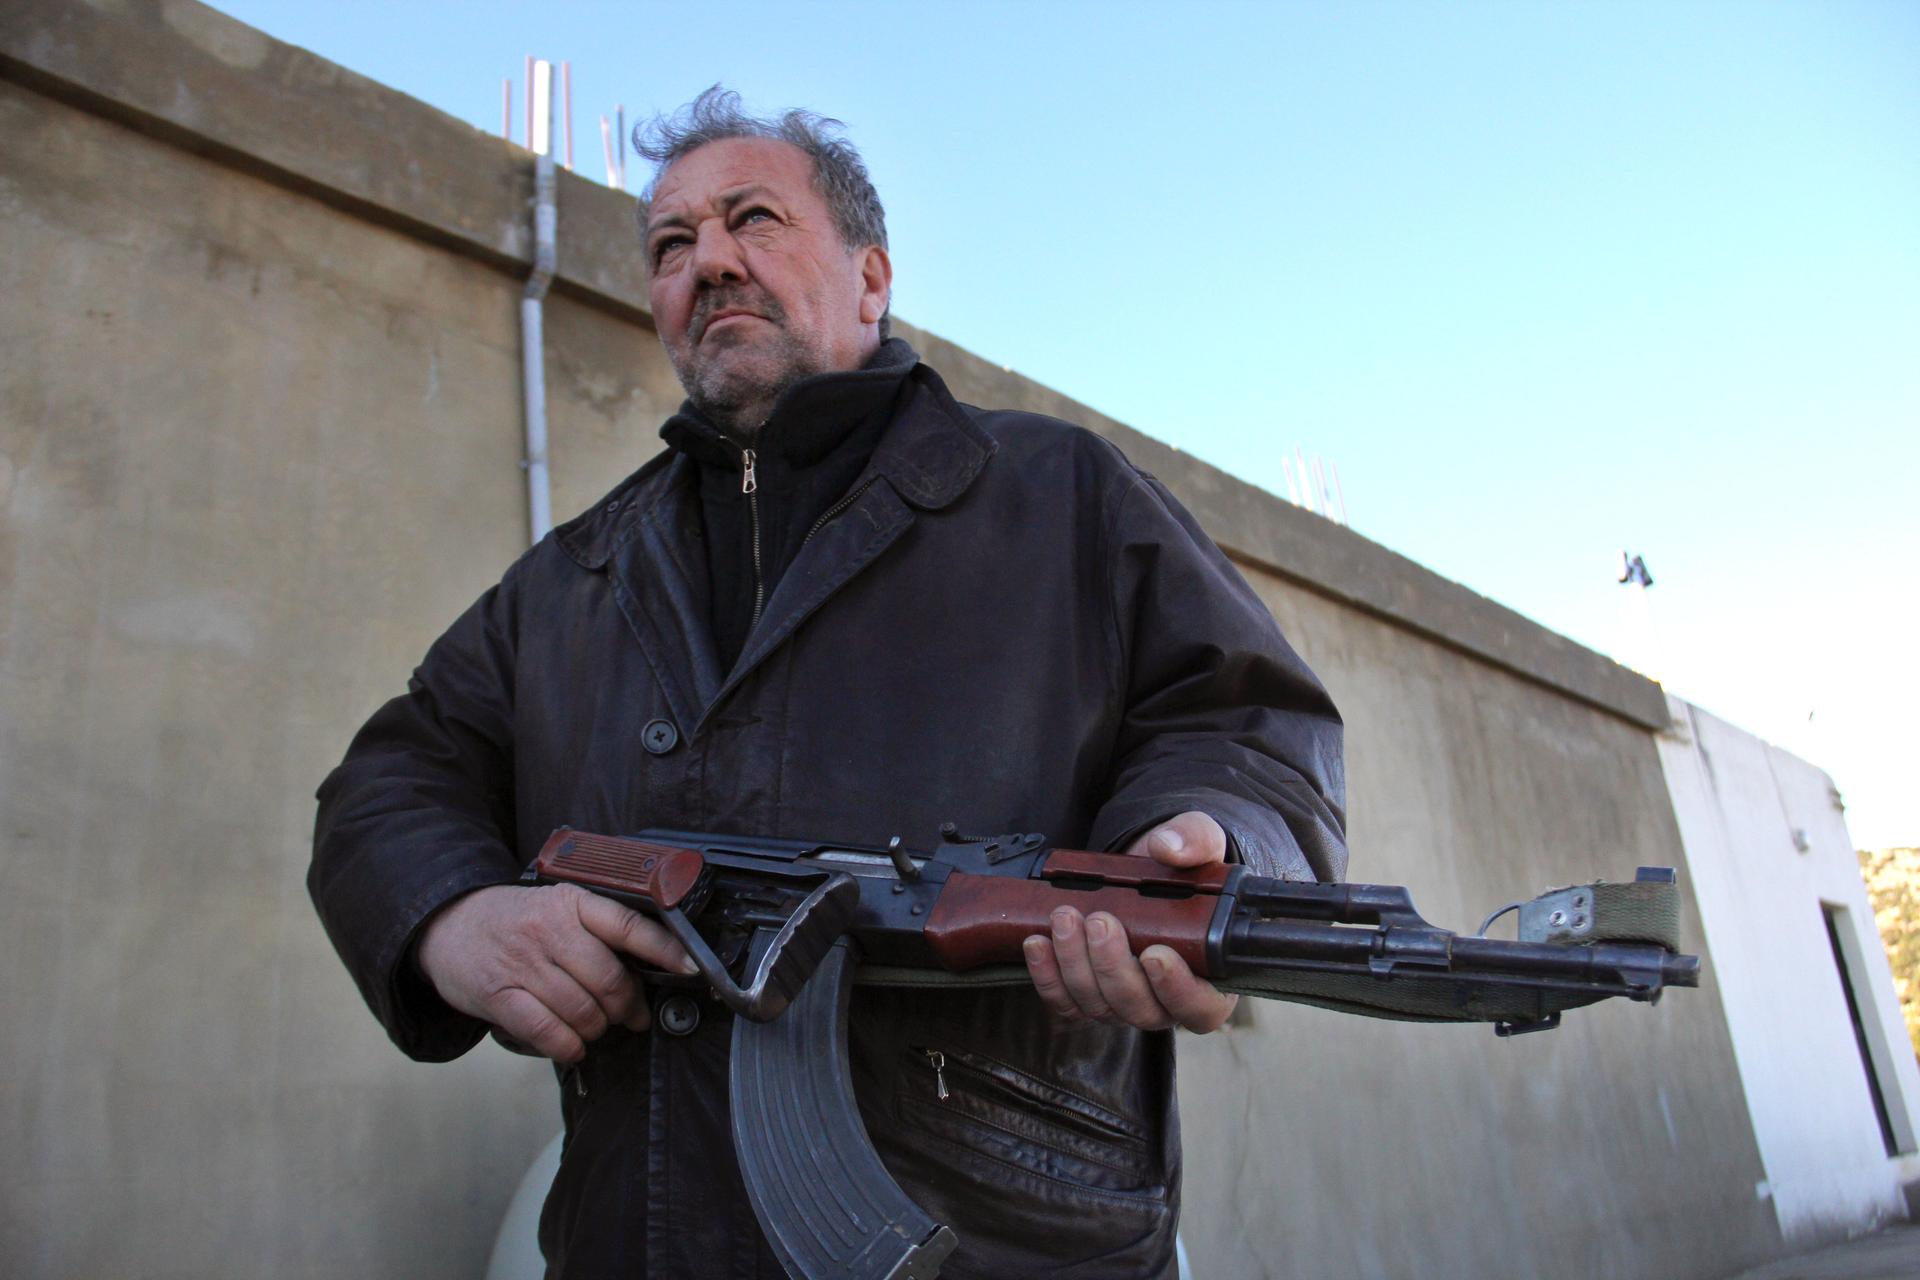 a man shown with a large gun